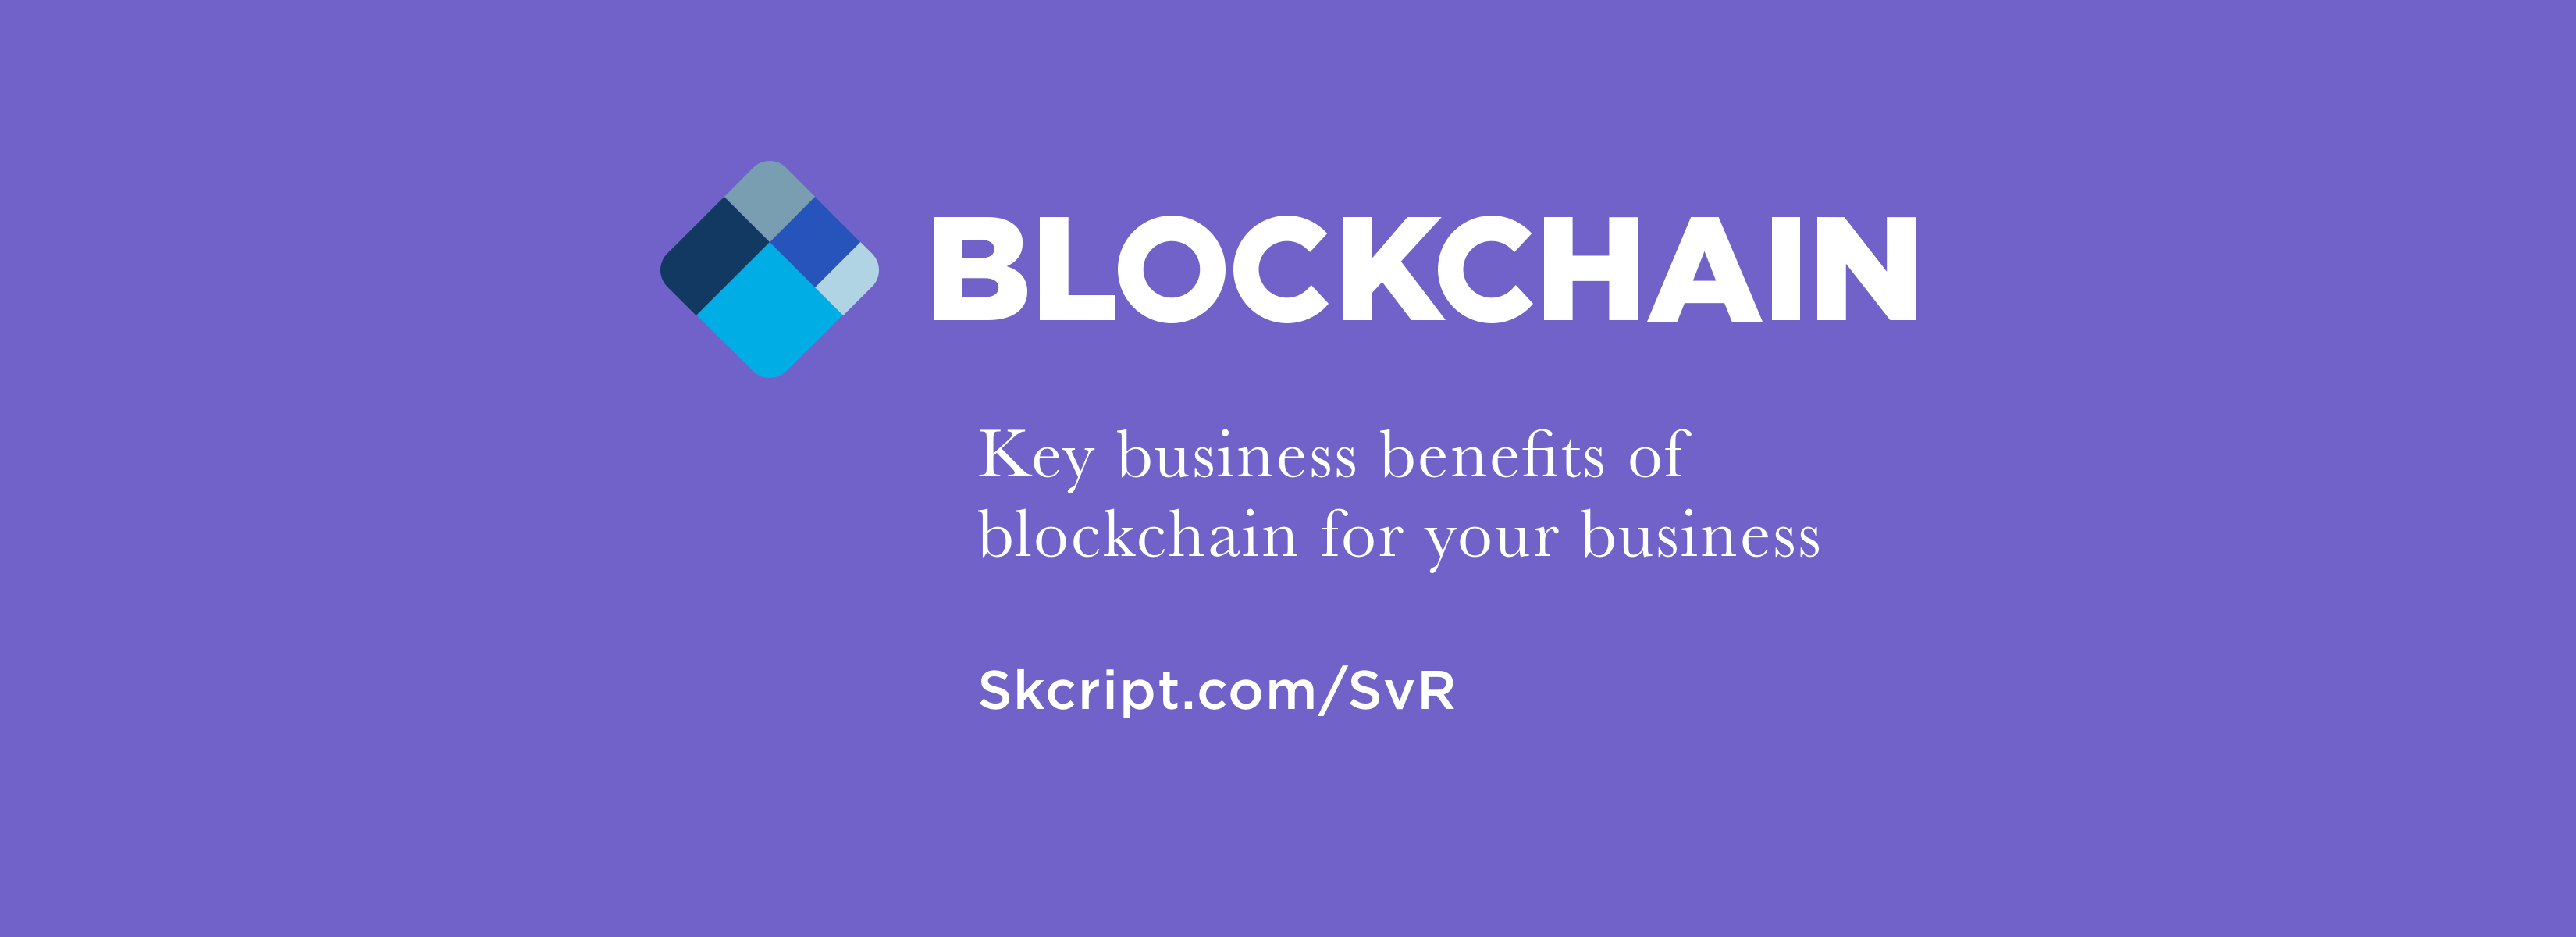 Key business benefits of blockchain. AKA the business side of blockchain a CXO should know.